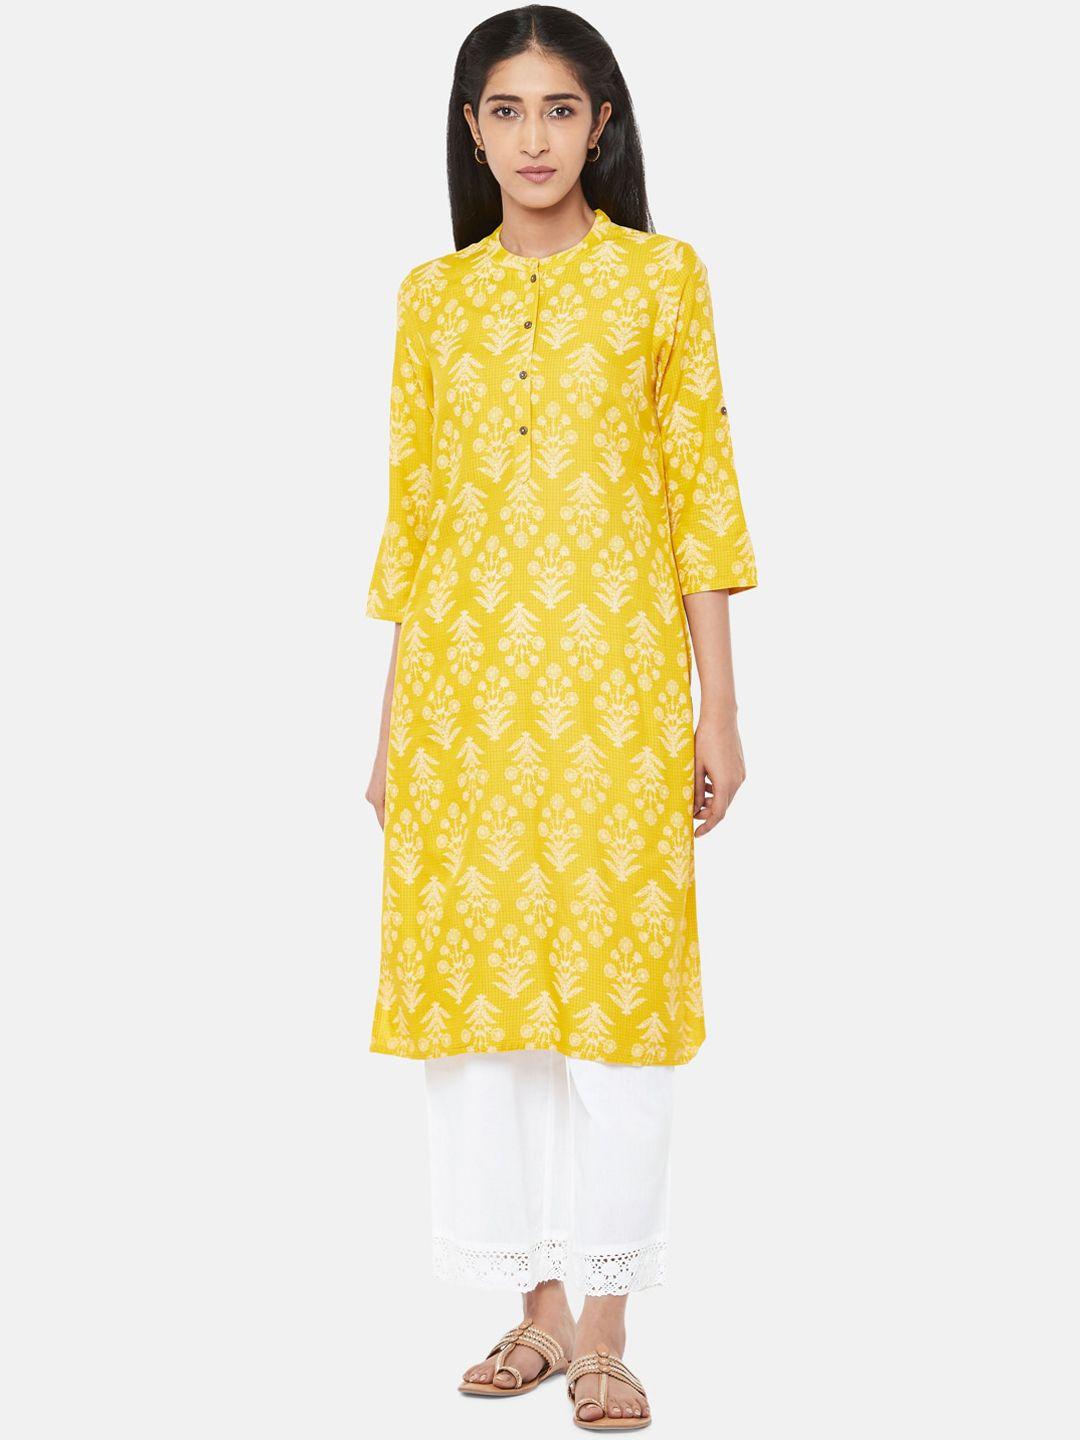 rangmanch by pantaloons women yellow floral printed kurta